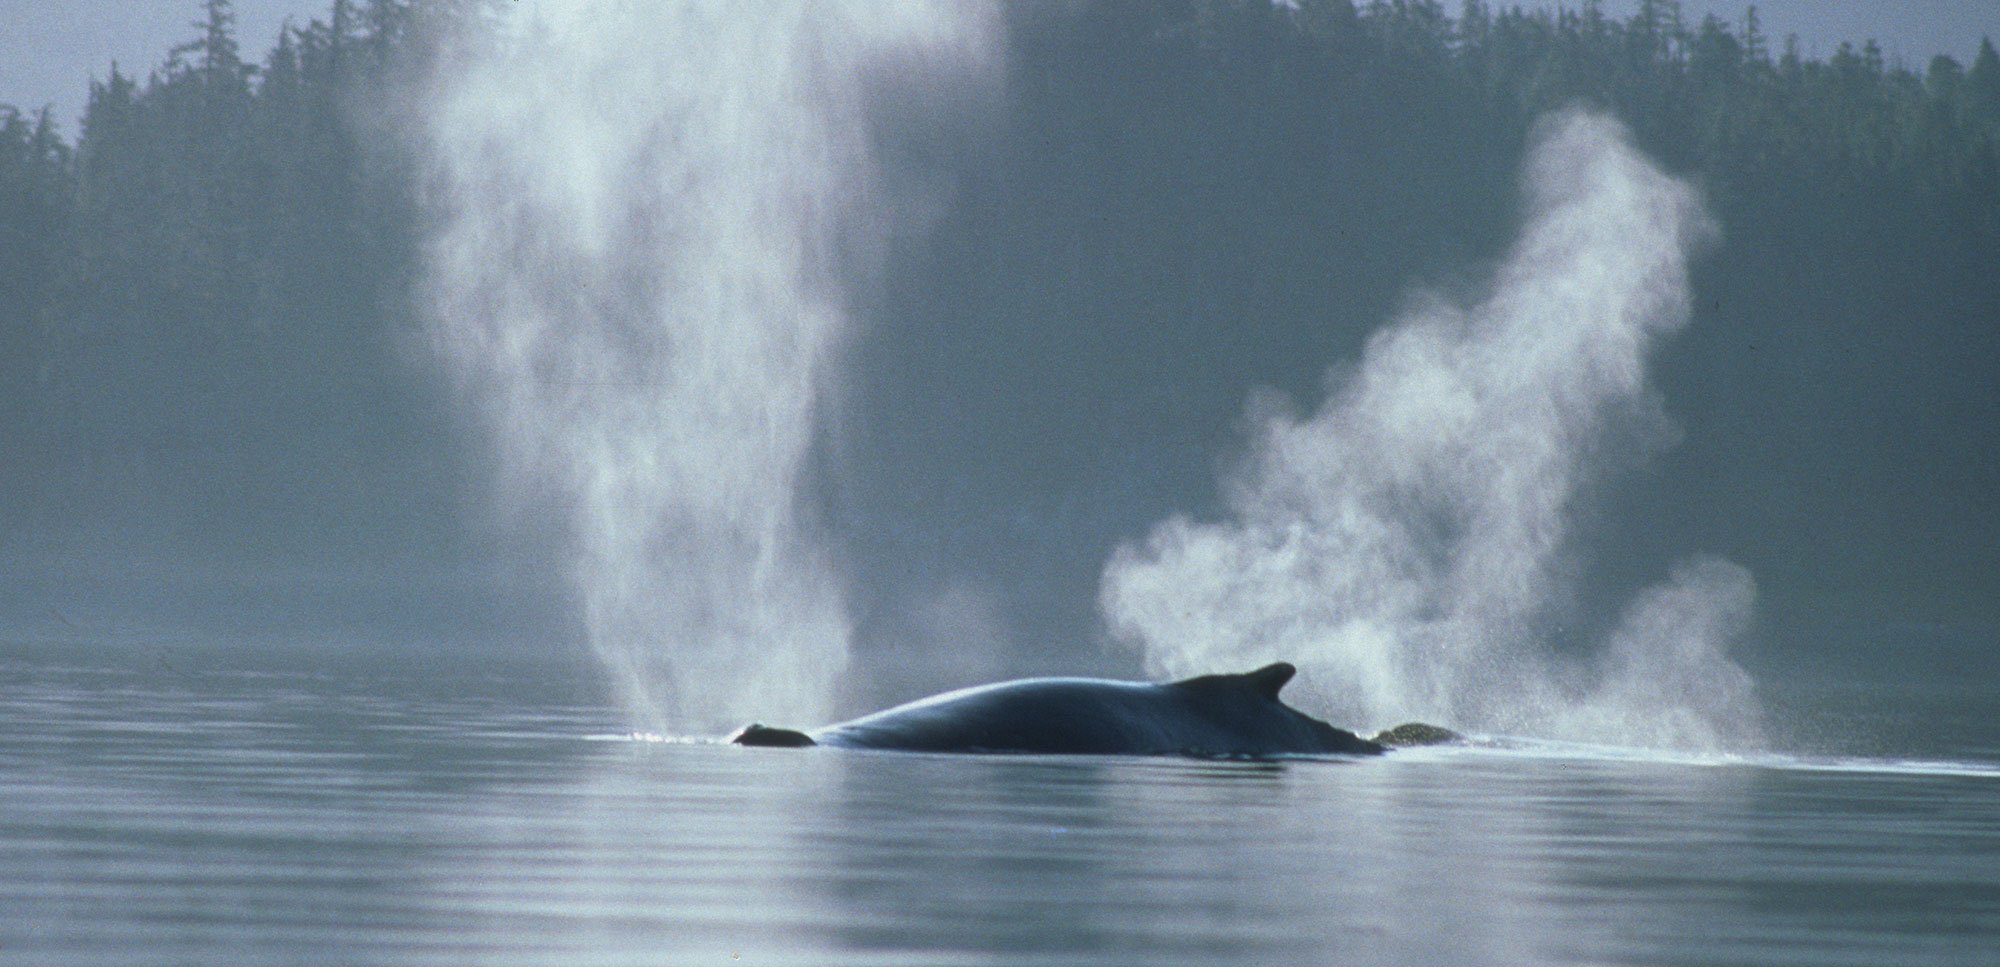 Humpback whales in Alaska